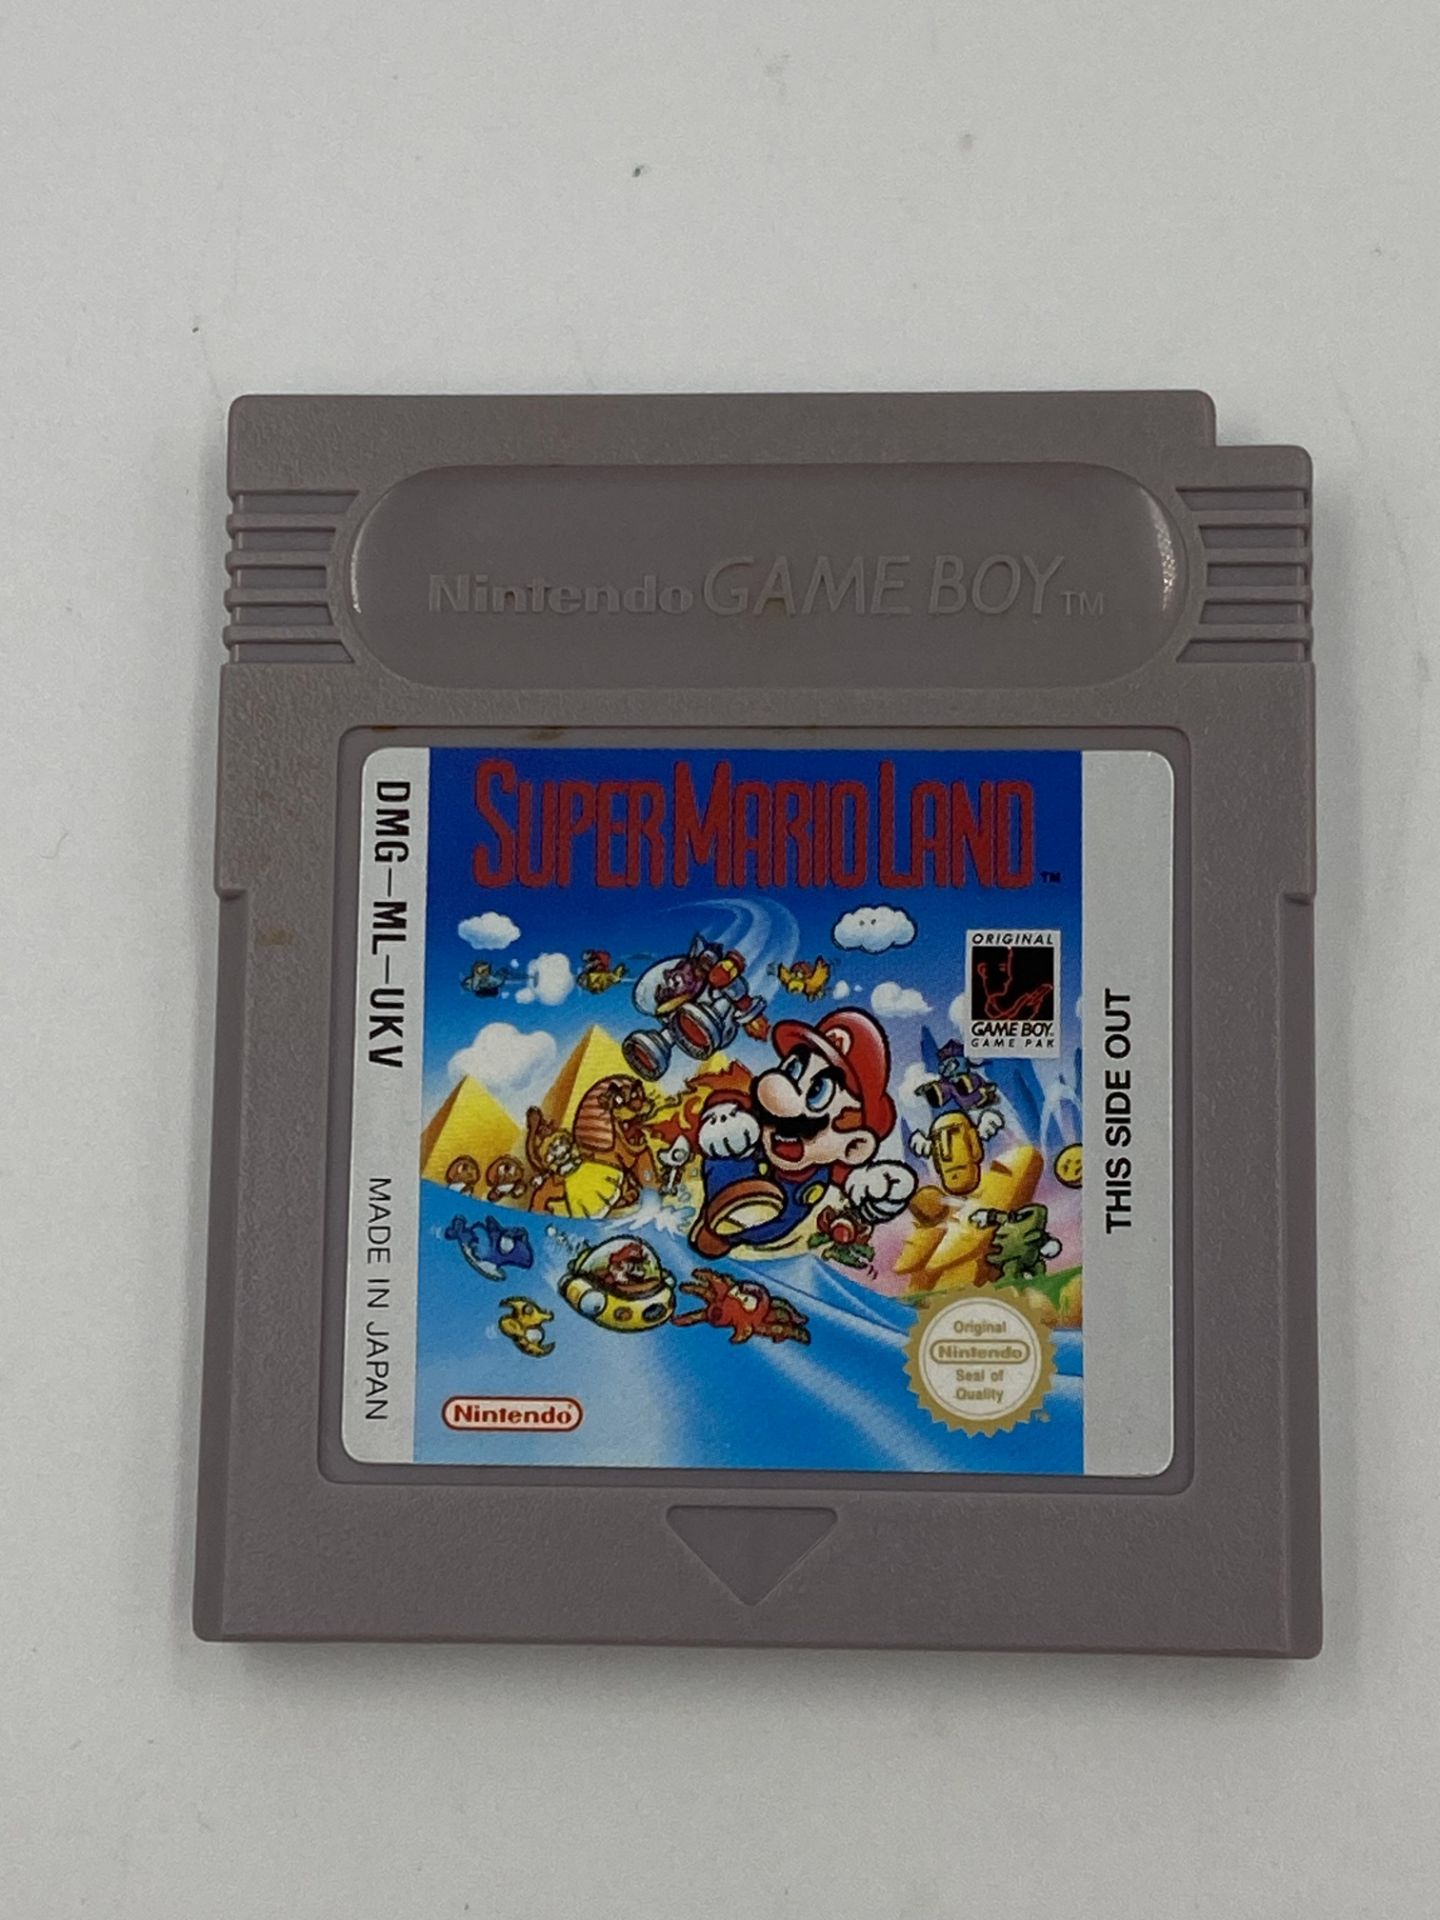 Nintendo Game Boy Super Mario Land - Image 2 of 2